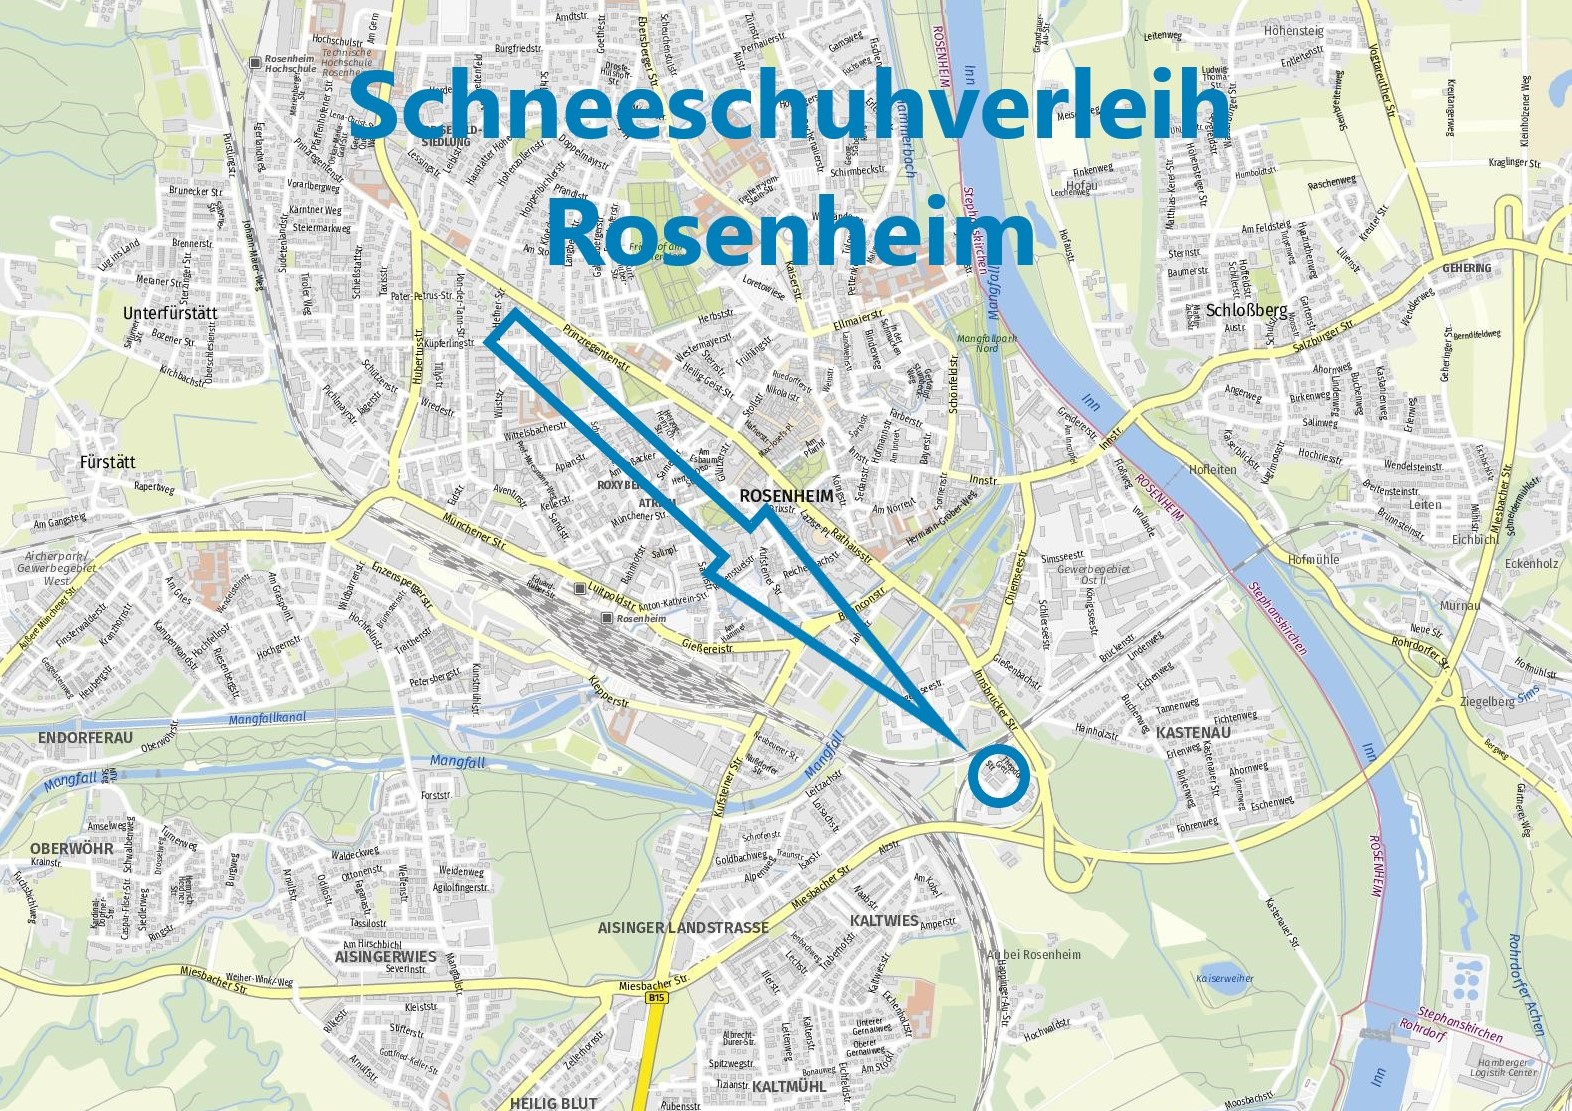 Schneeschuhverleih Rosenheim - Karte